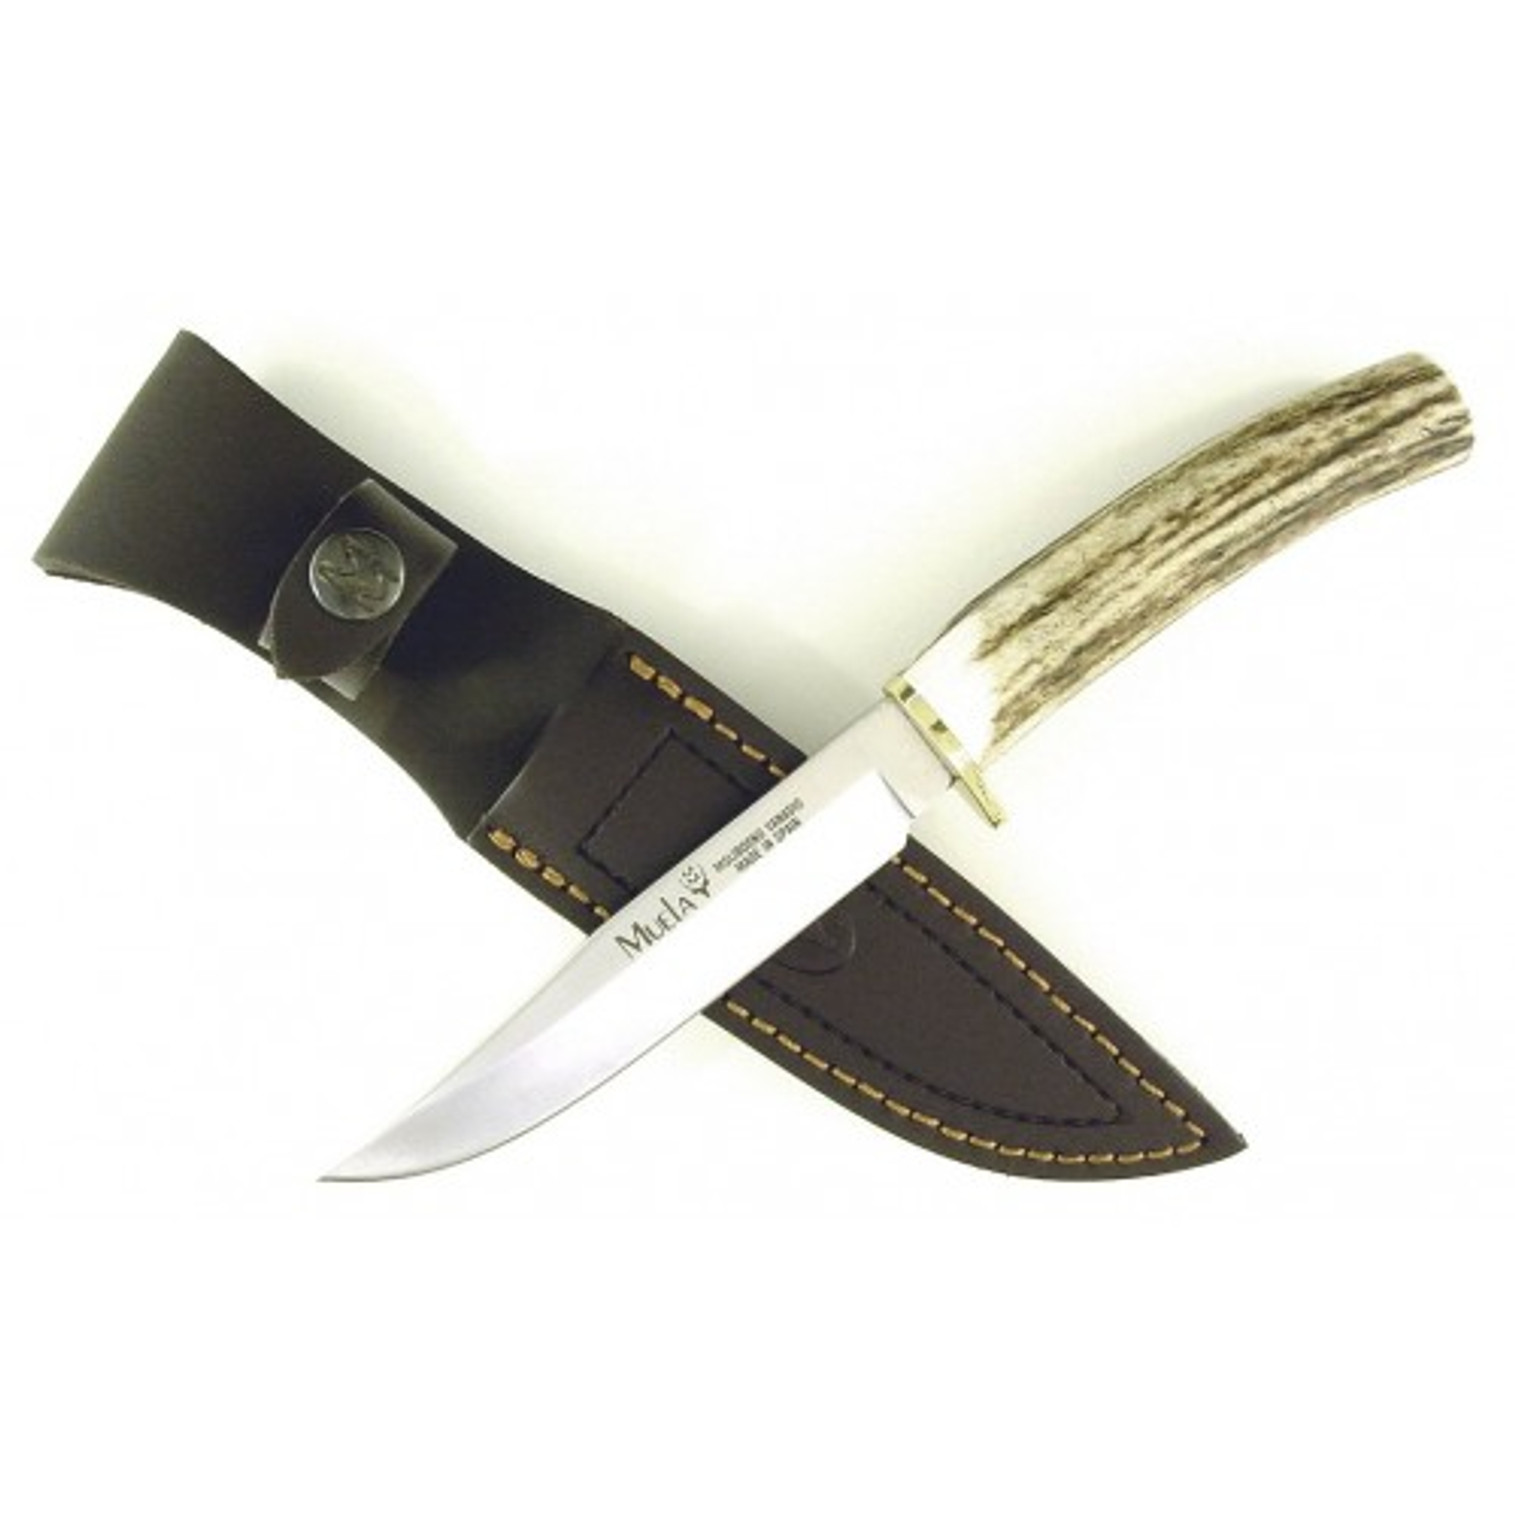 MUELA GRED-12A, X50CrMoV15, 4-5/8" Fixed Blade Hunting Knife, Deer Horn Handle, boxed